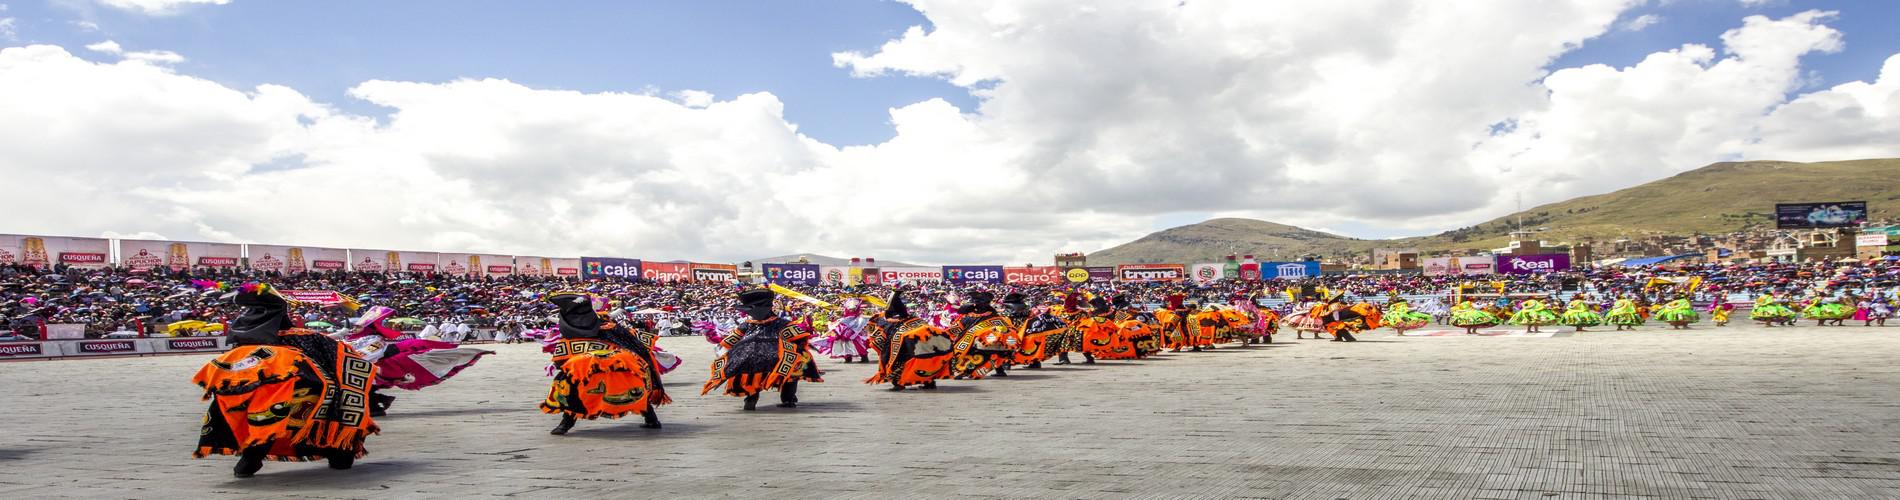 5 reasons to visit Puno during the Virgen de la Candelaria festival